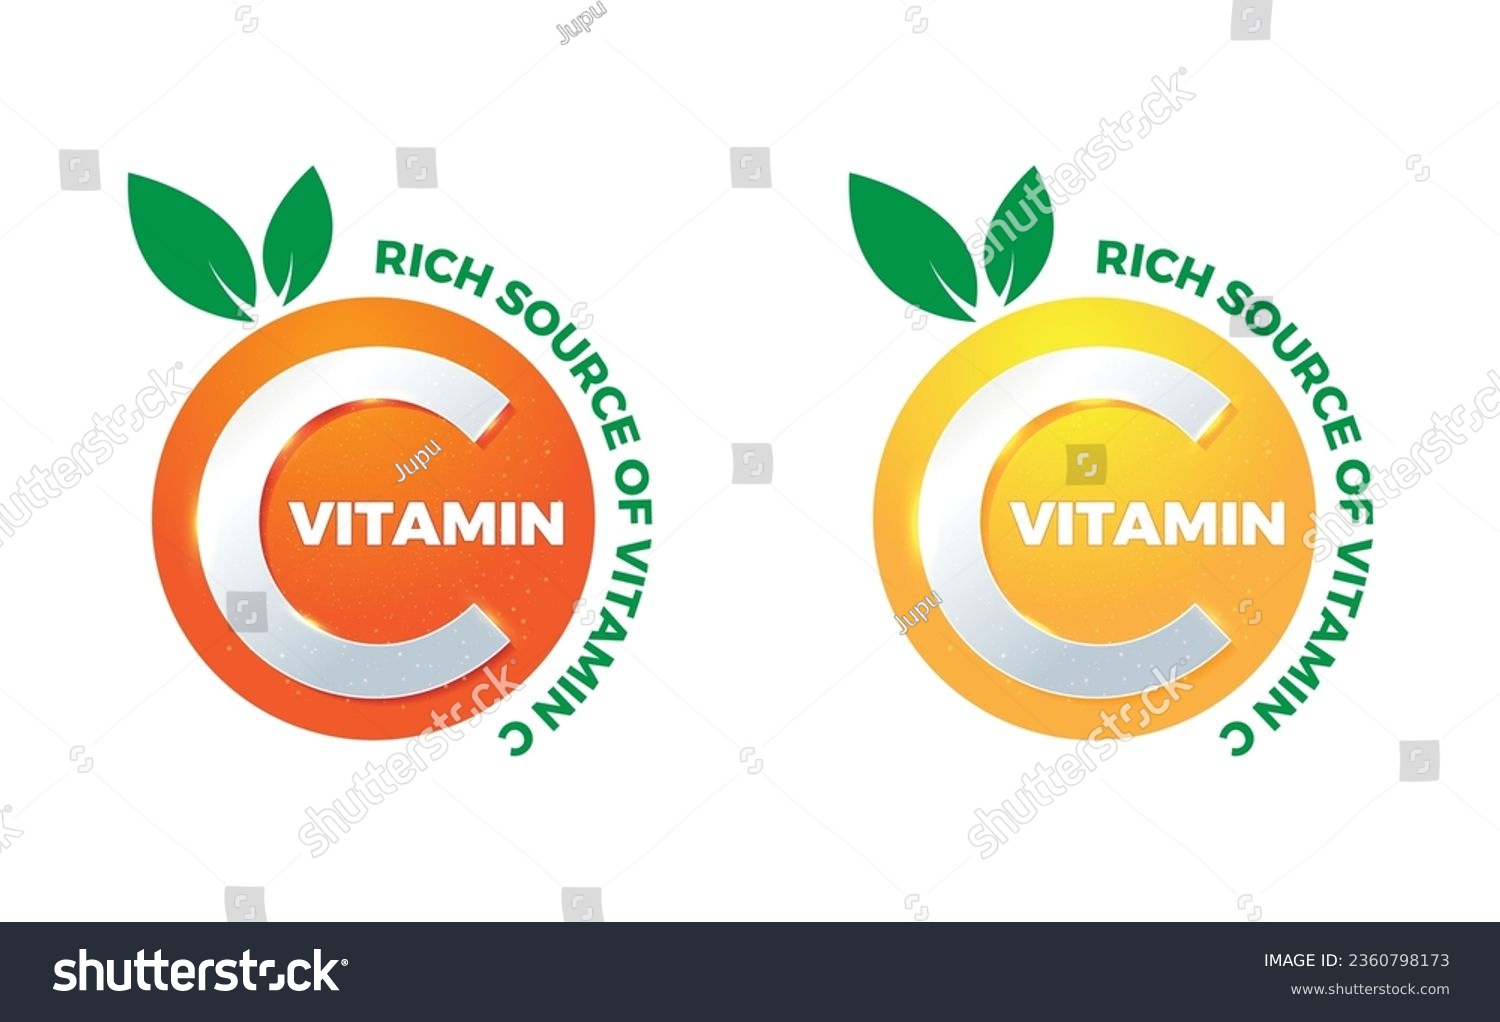 rich source of vitamin c, logo, icon, sticker, label, packaging design, symbol, badge, latest illustration, Stamp, seal, antioxident, orange lemon, pharma, medical, suppliment. #2360798173